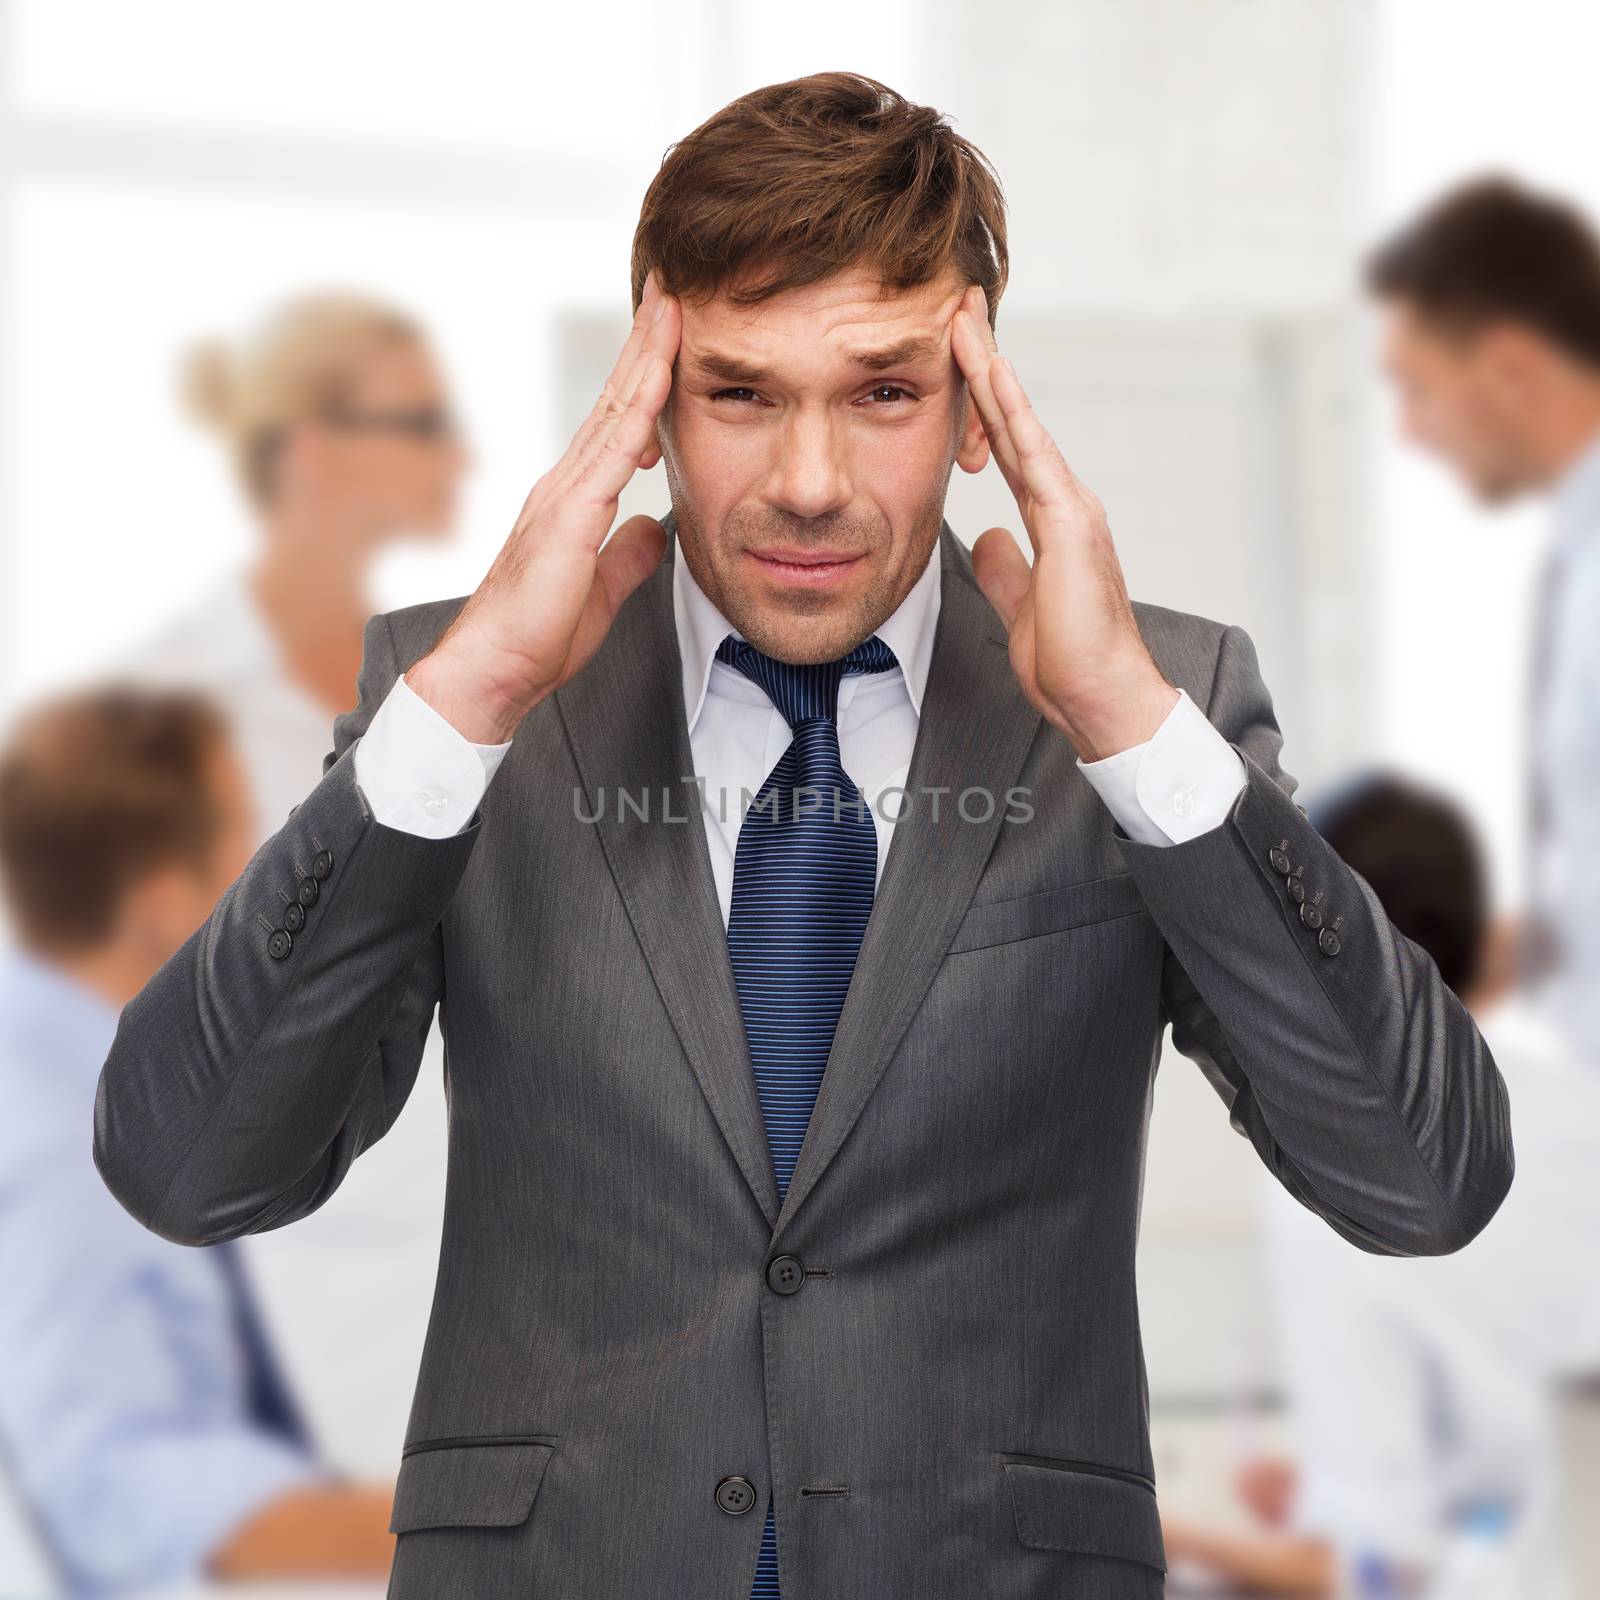 stressed buisnessman or teacher having headache by dolgachov